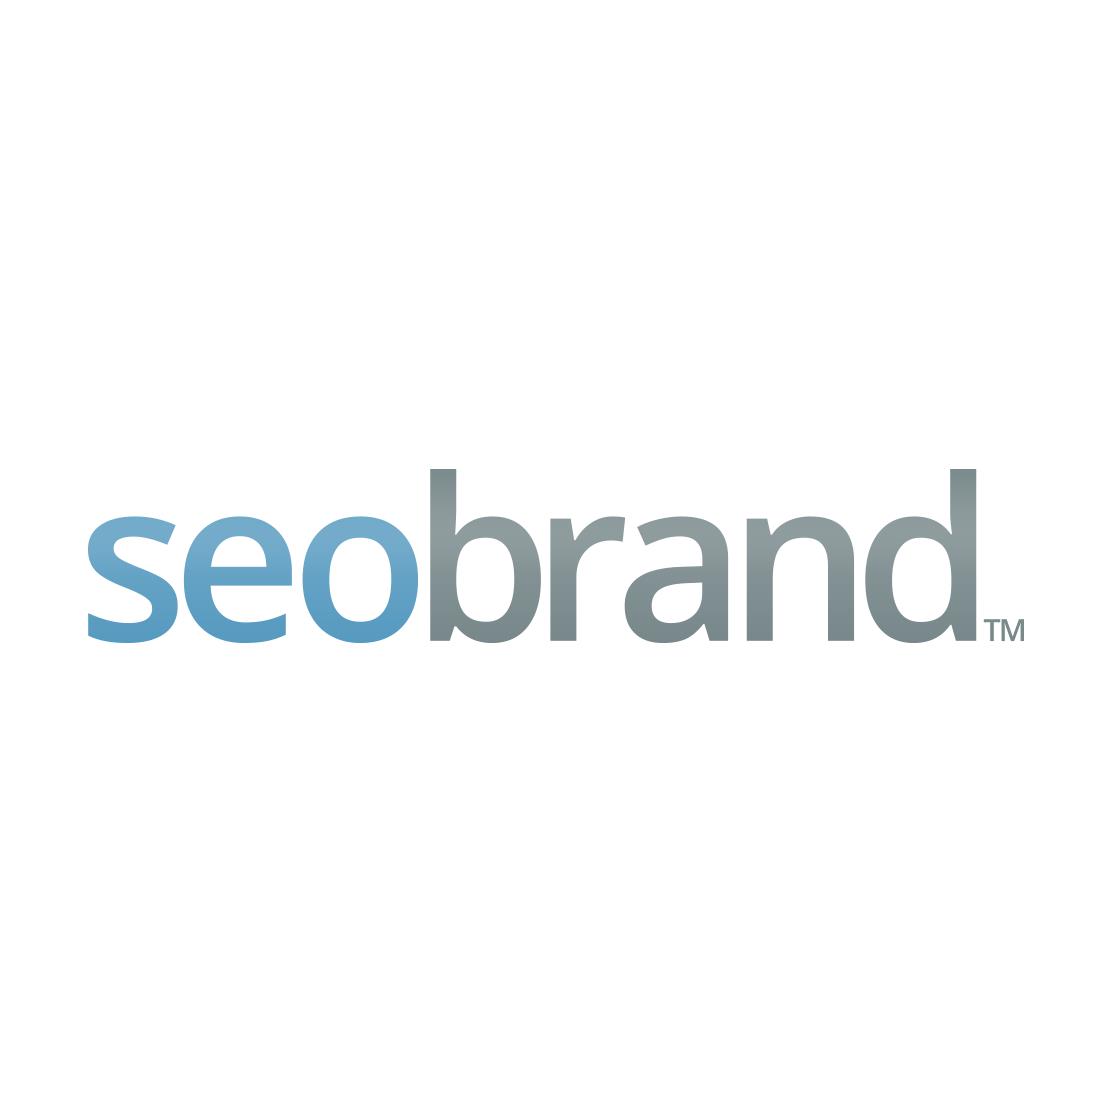 Top New York SEO Business Logo: SEO Brand